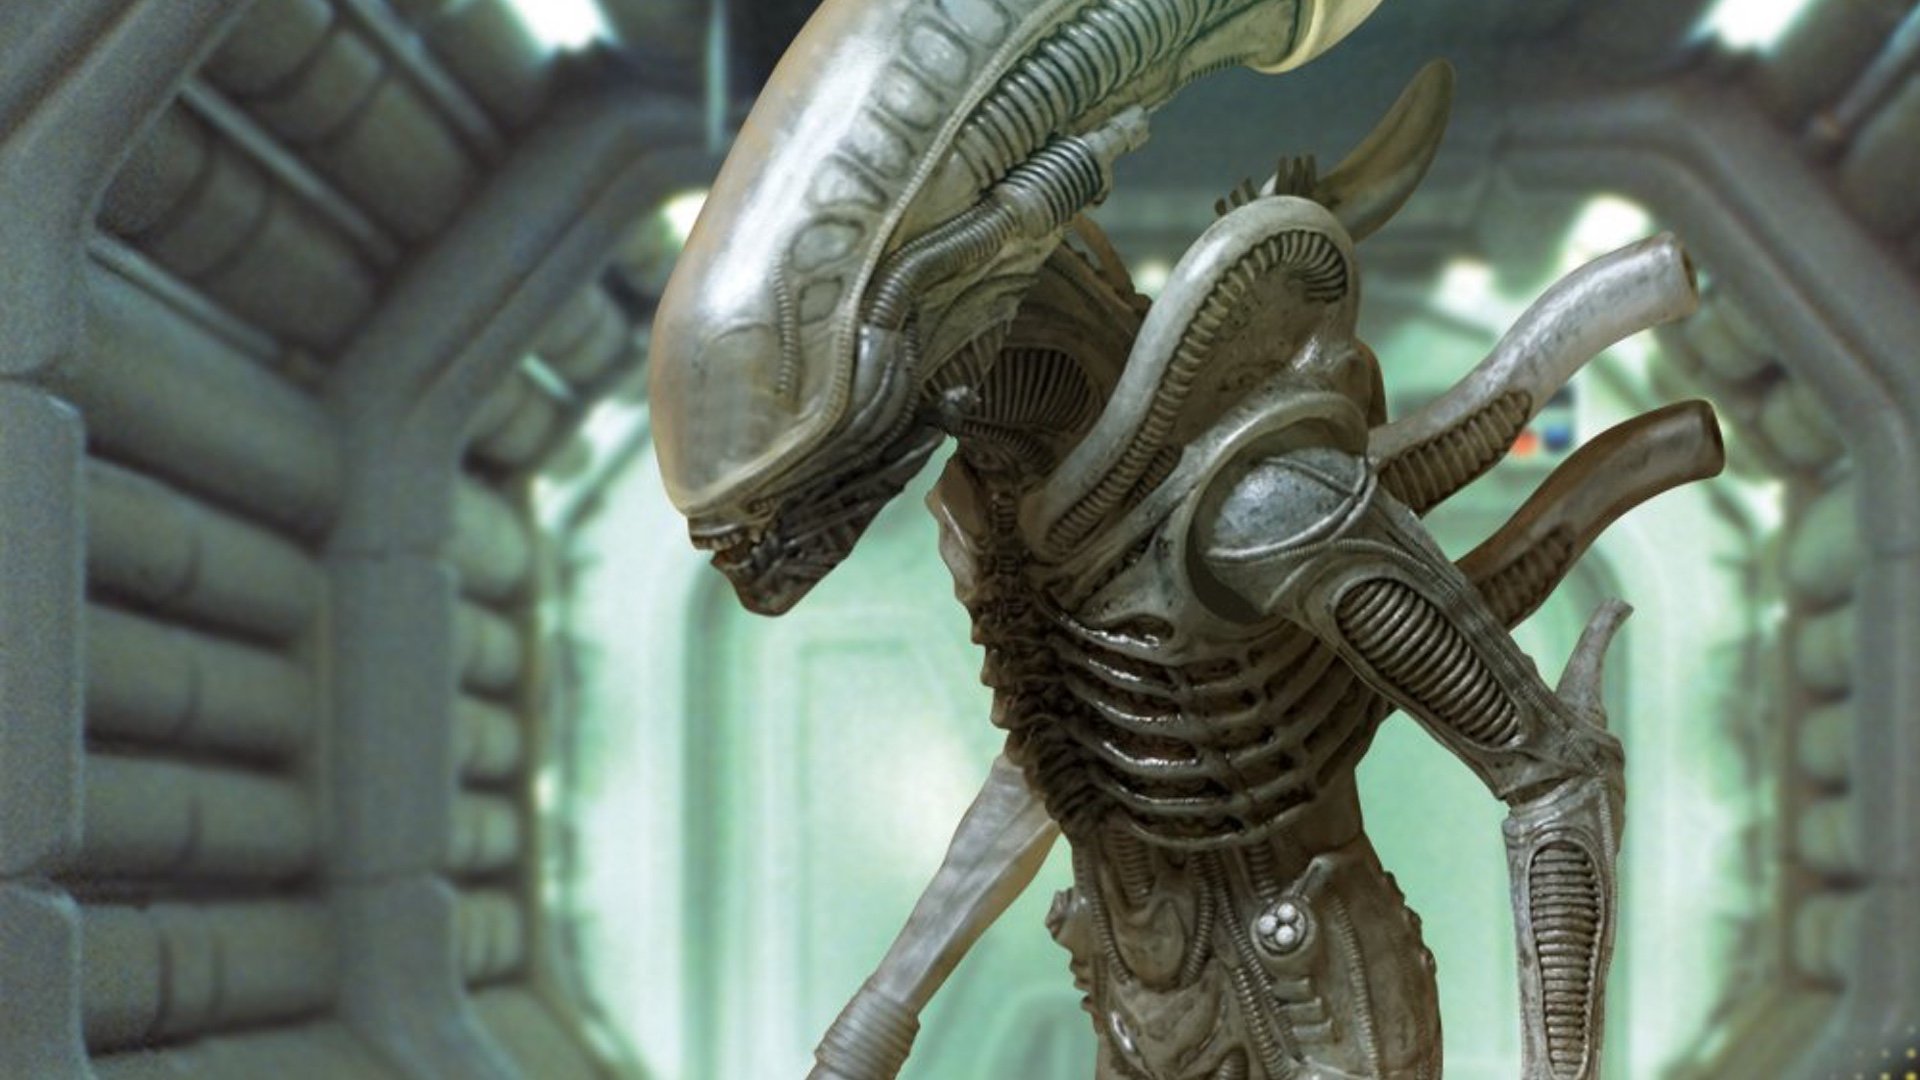 The Alien Was Originally Translucent